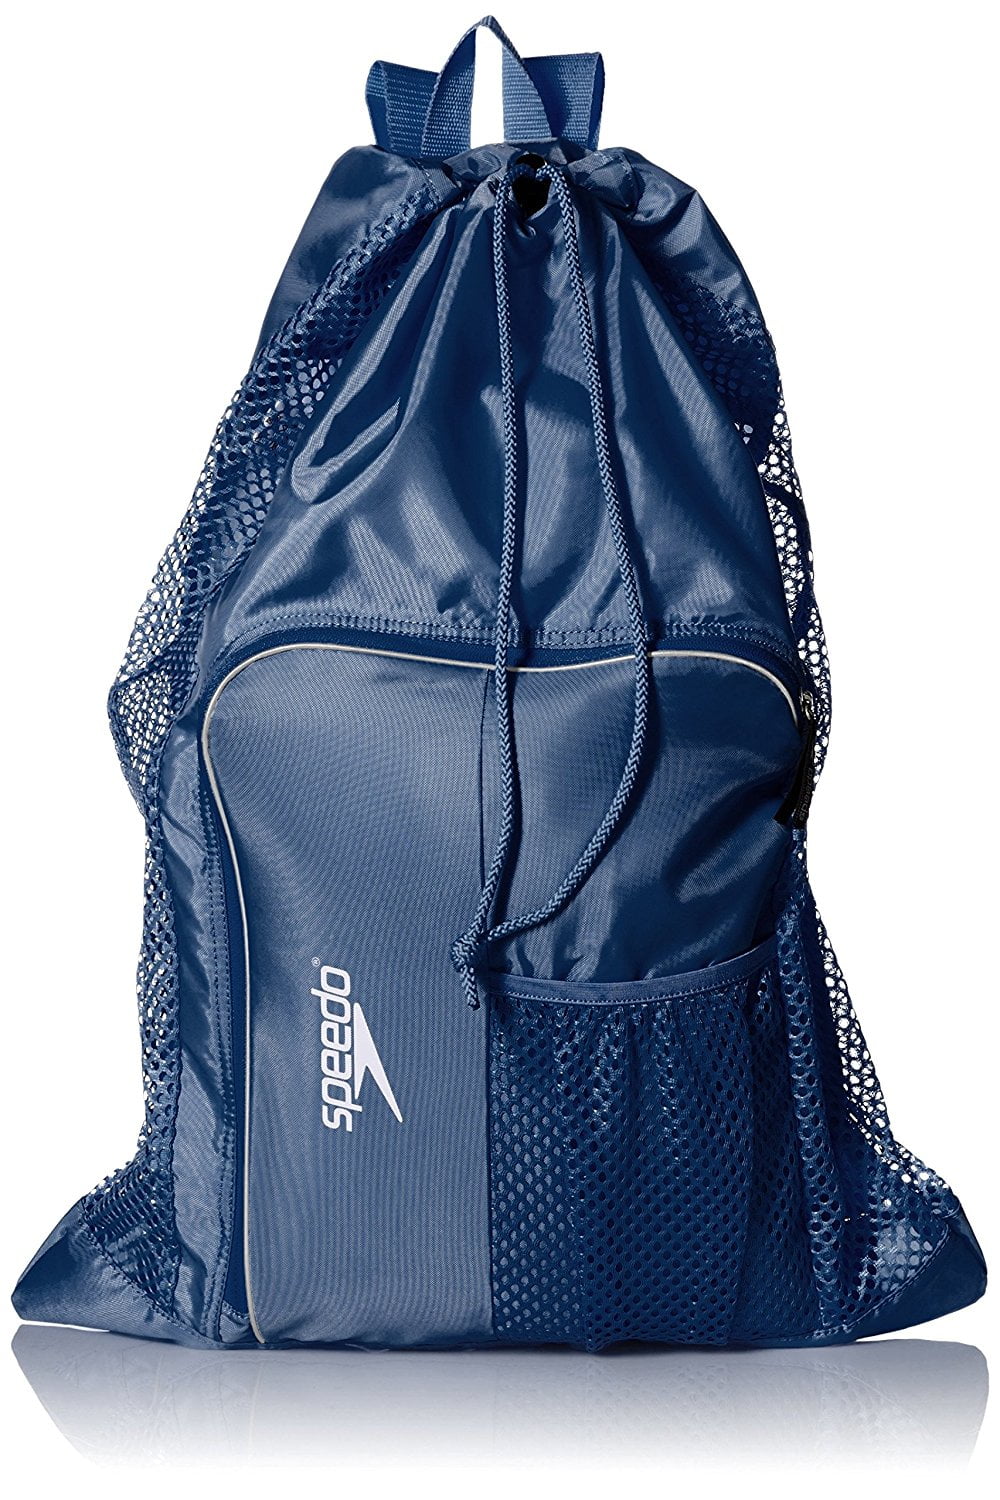 Swimming Bags for Men Deluxe Ventilator Mesh Equipment Bag Lightweight 24''x17'' 